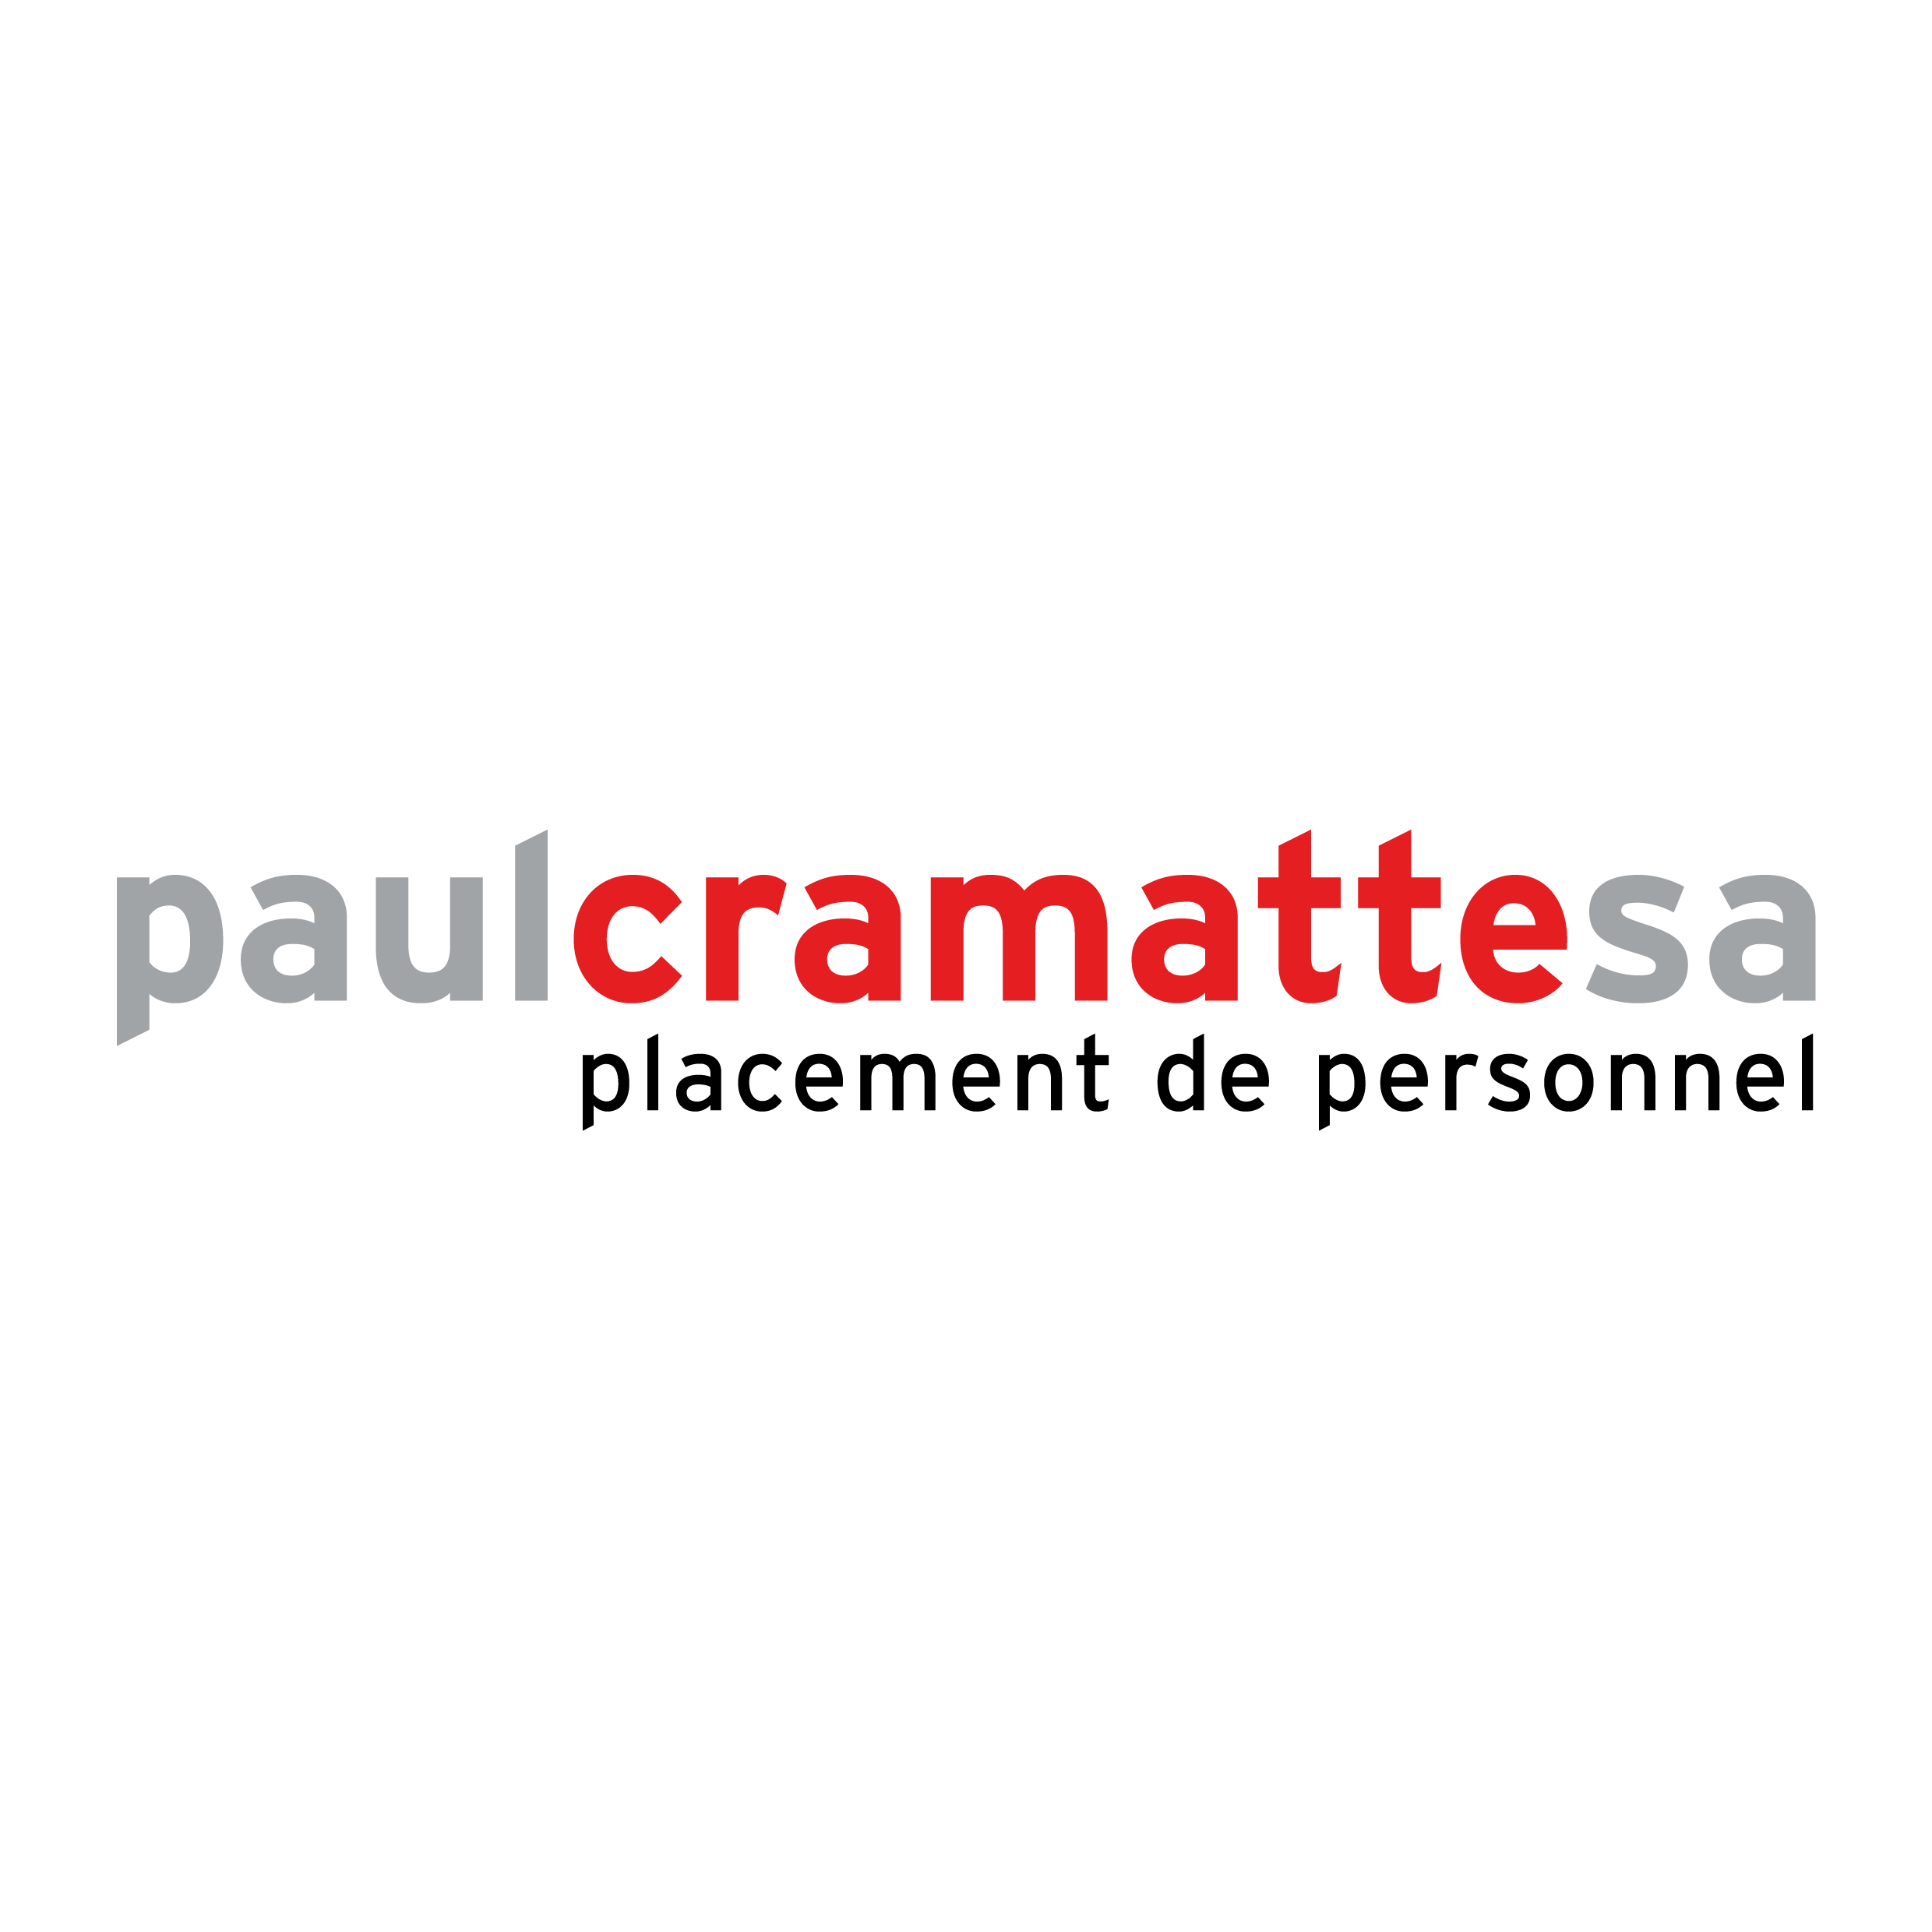 Paul Cramatte SA Logo